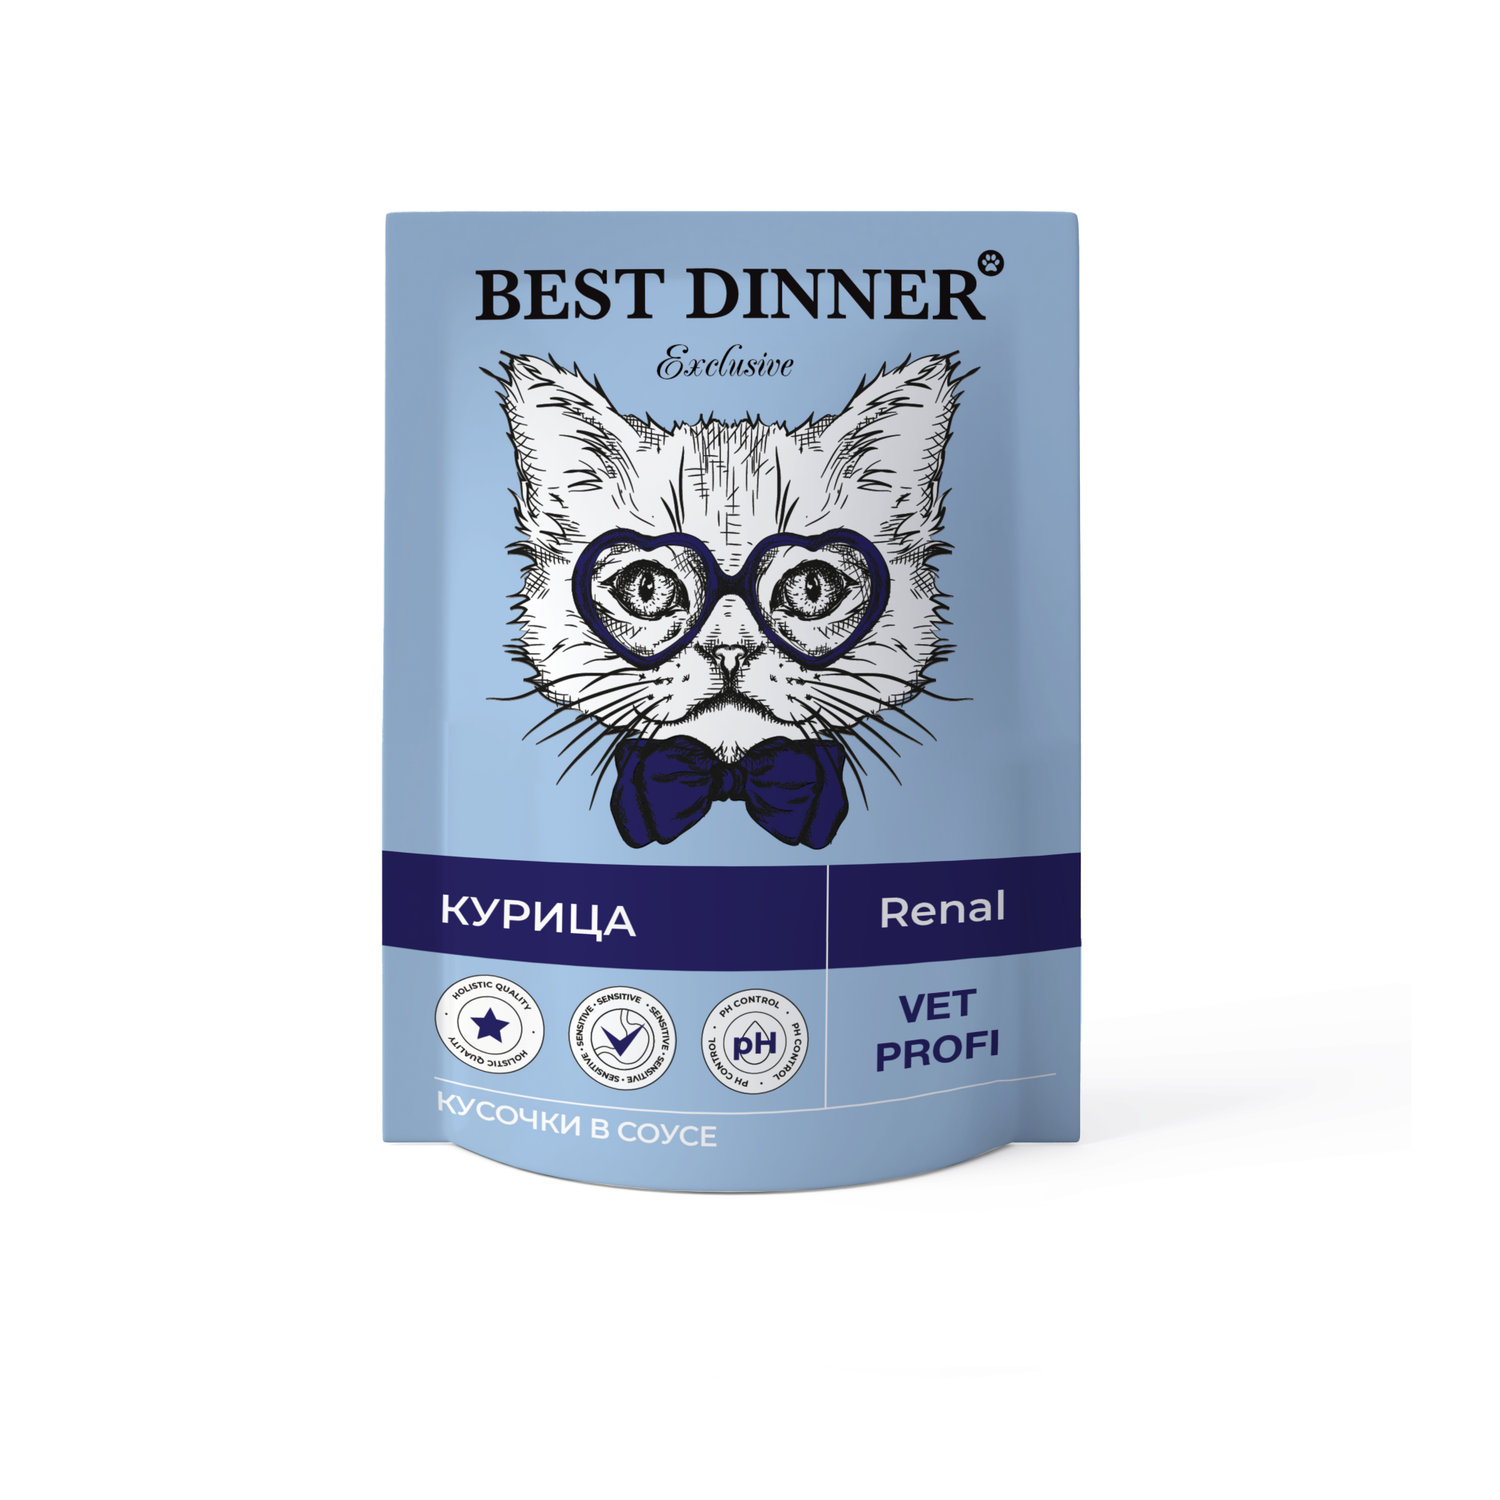 Корм для кошек Best Dinner 85г Exclusive Vet Profi Renal кусочки в соусе с курицей - фото 1